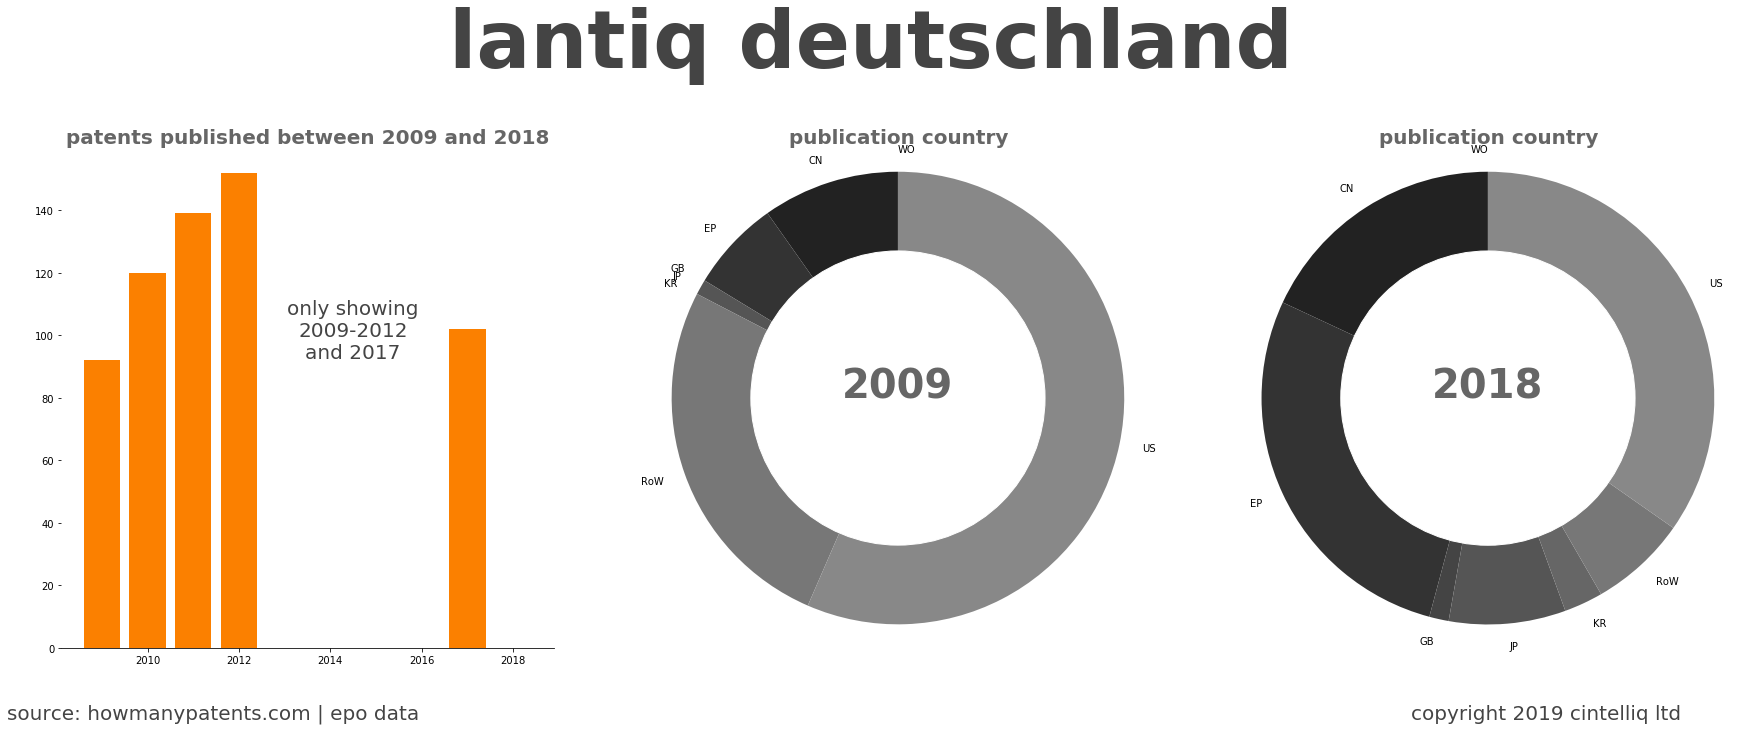 summary of patents for Lantiq Deutschland